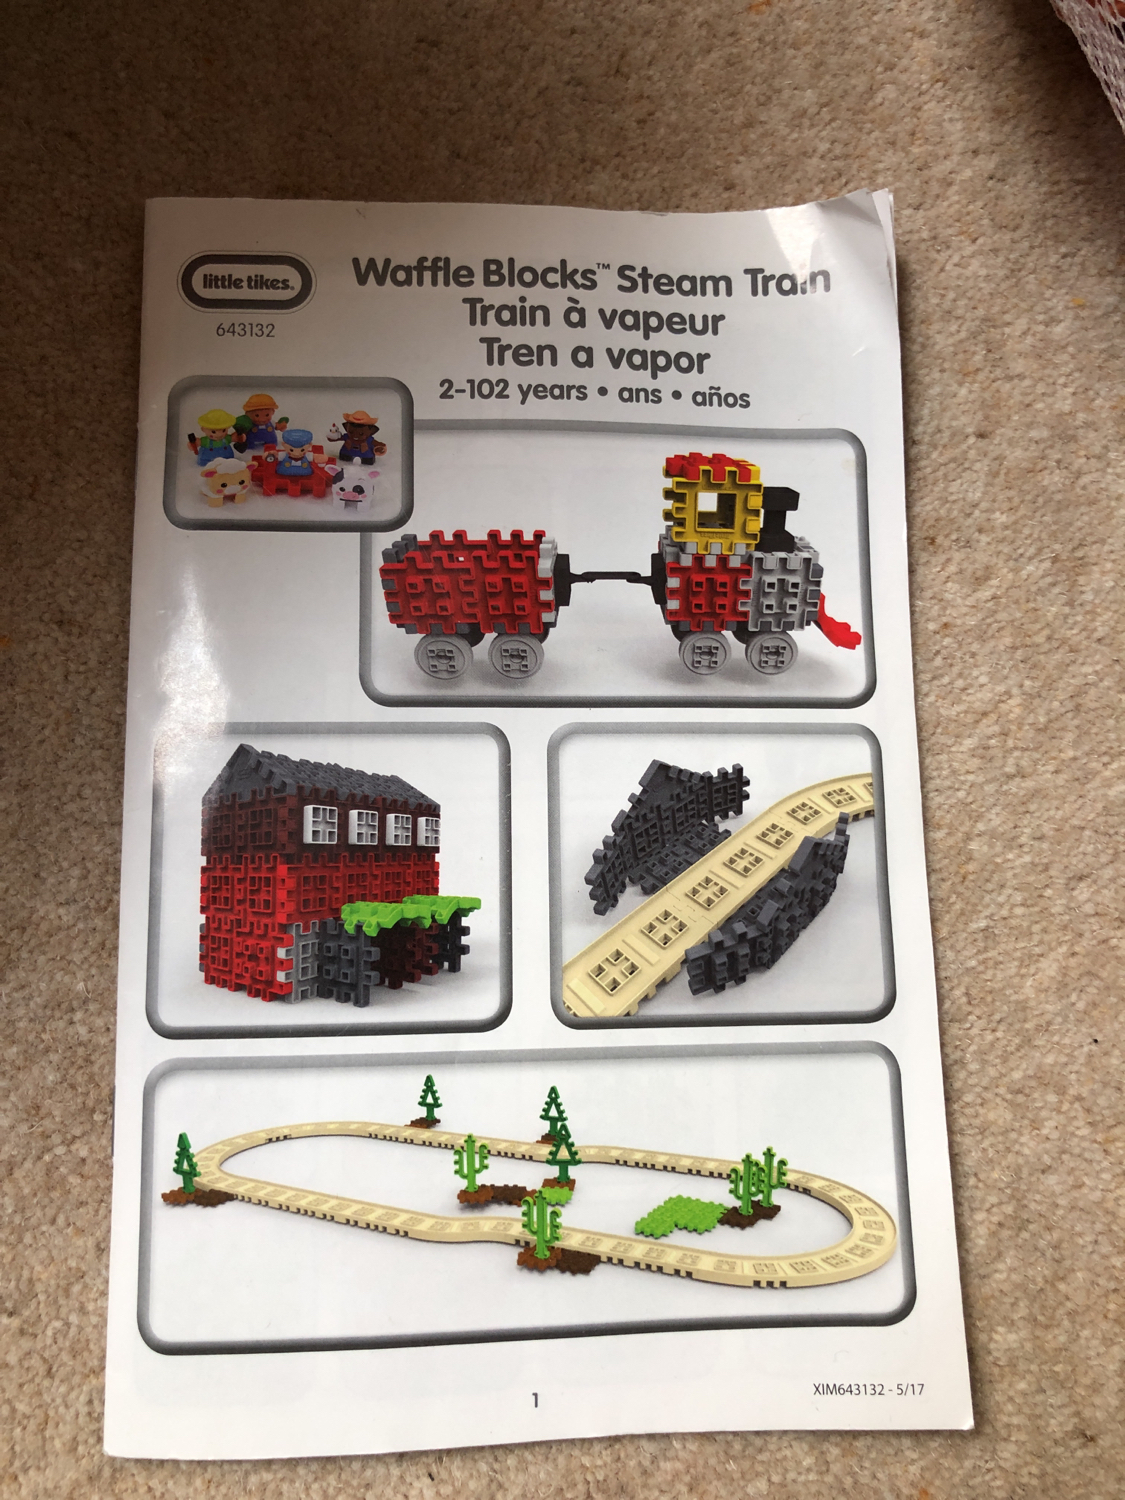 waffle blocks train instructions